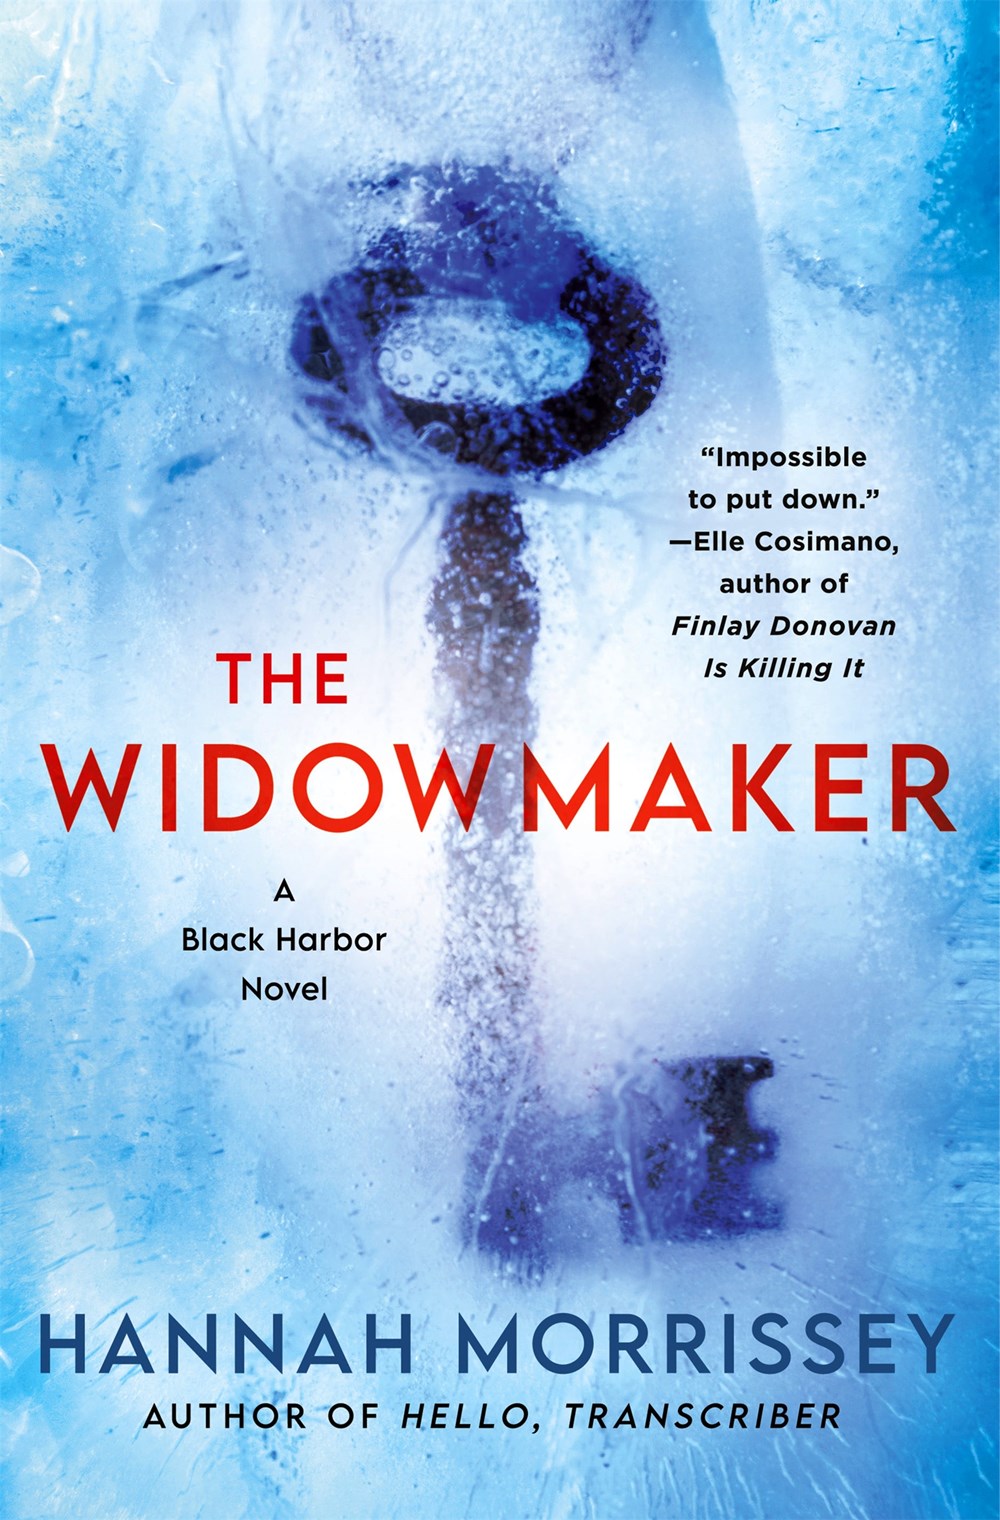 Review – The Widowmaker